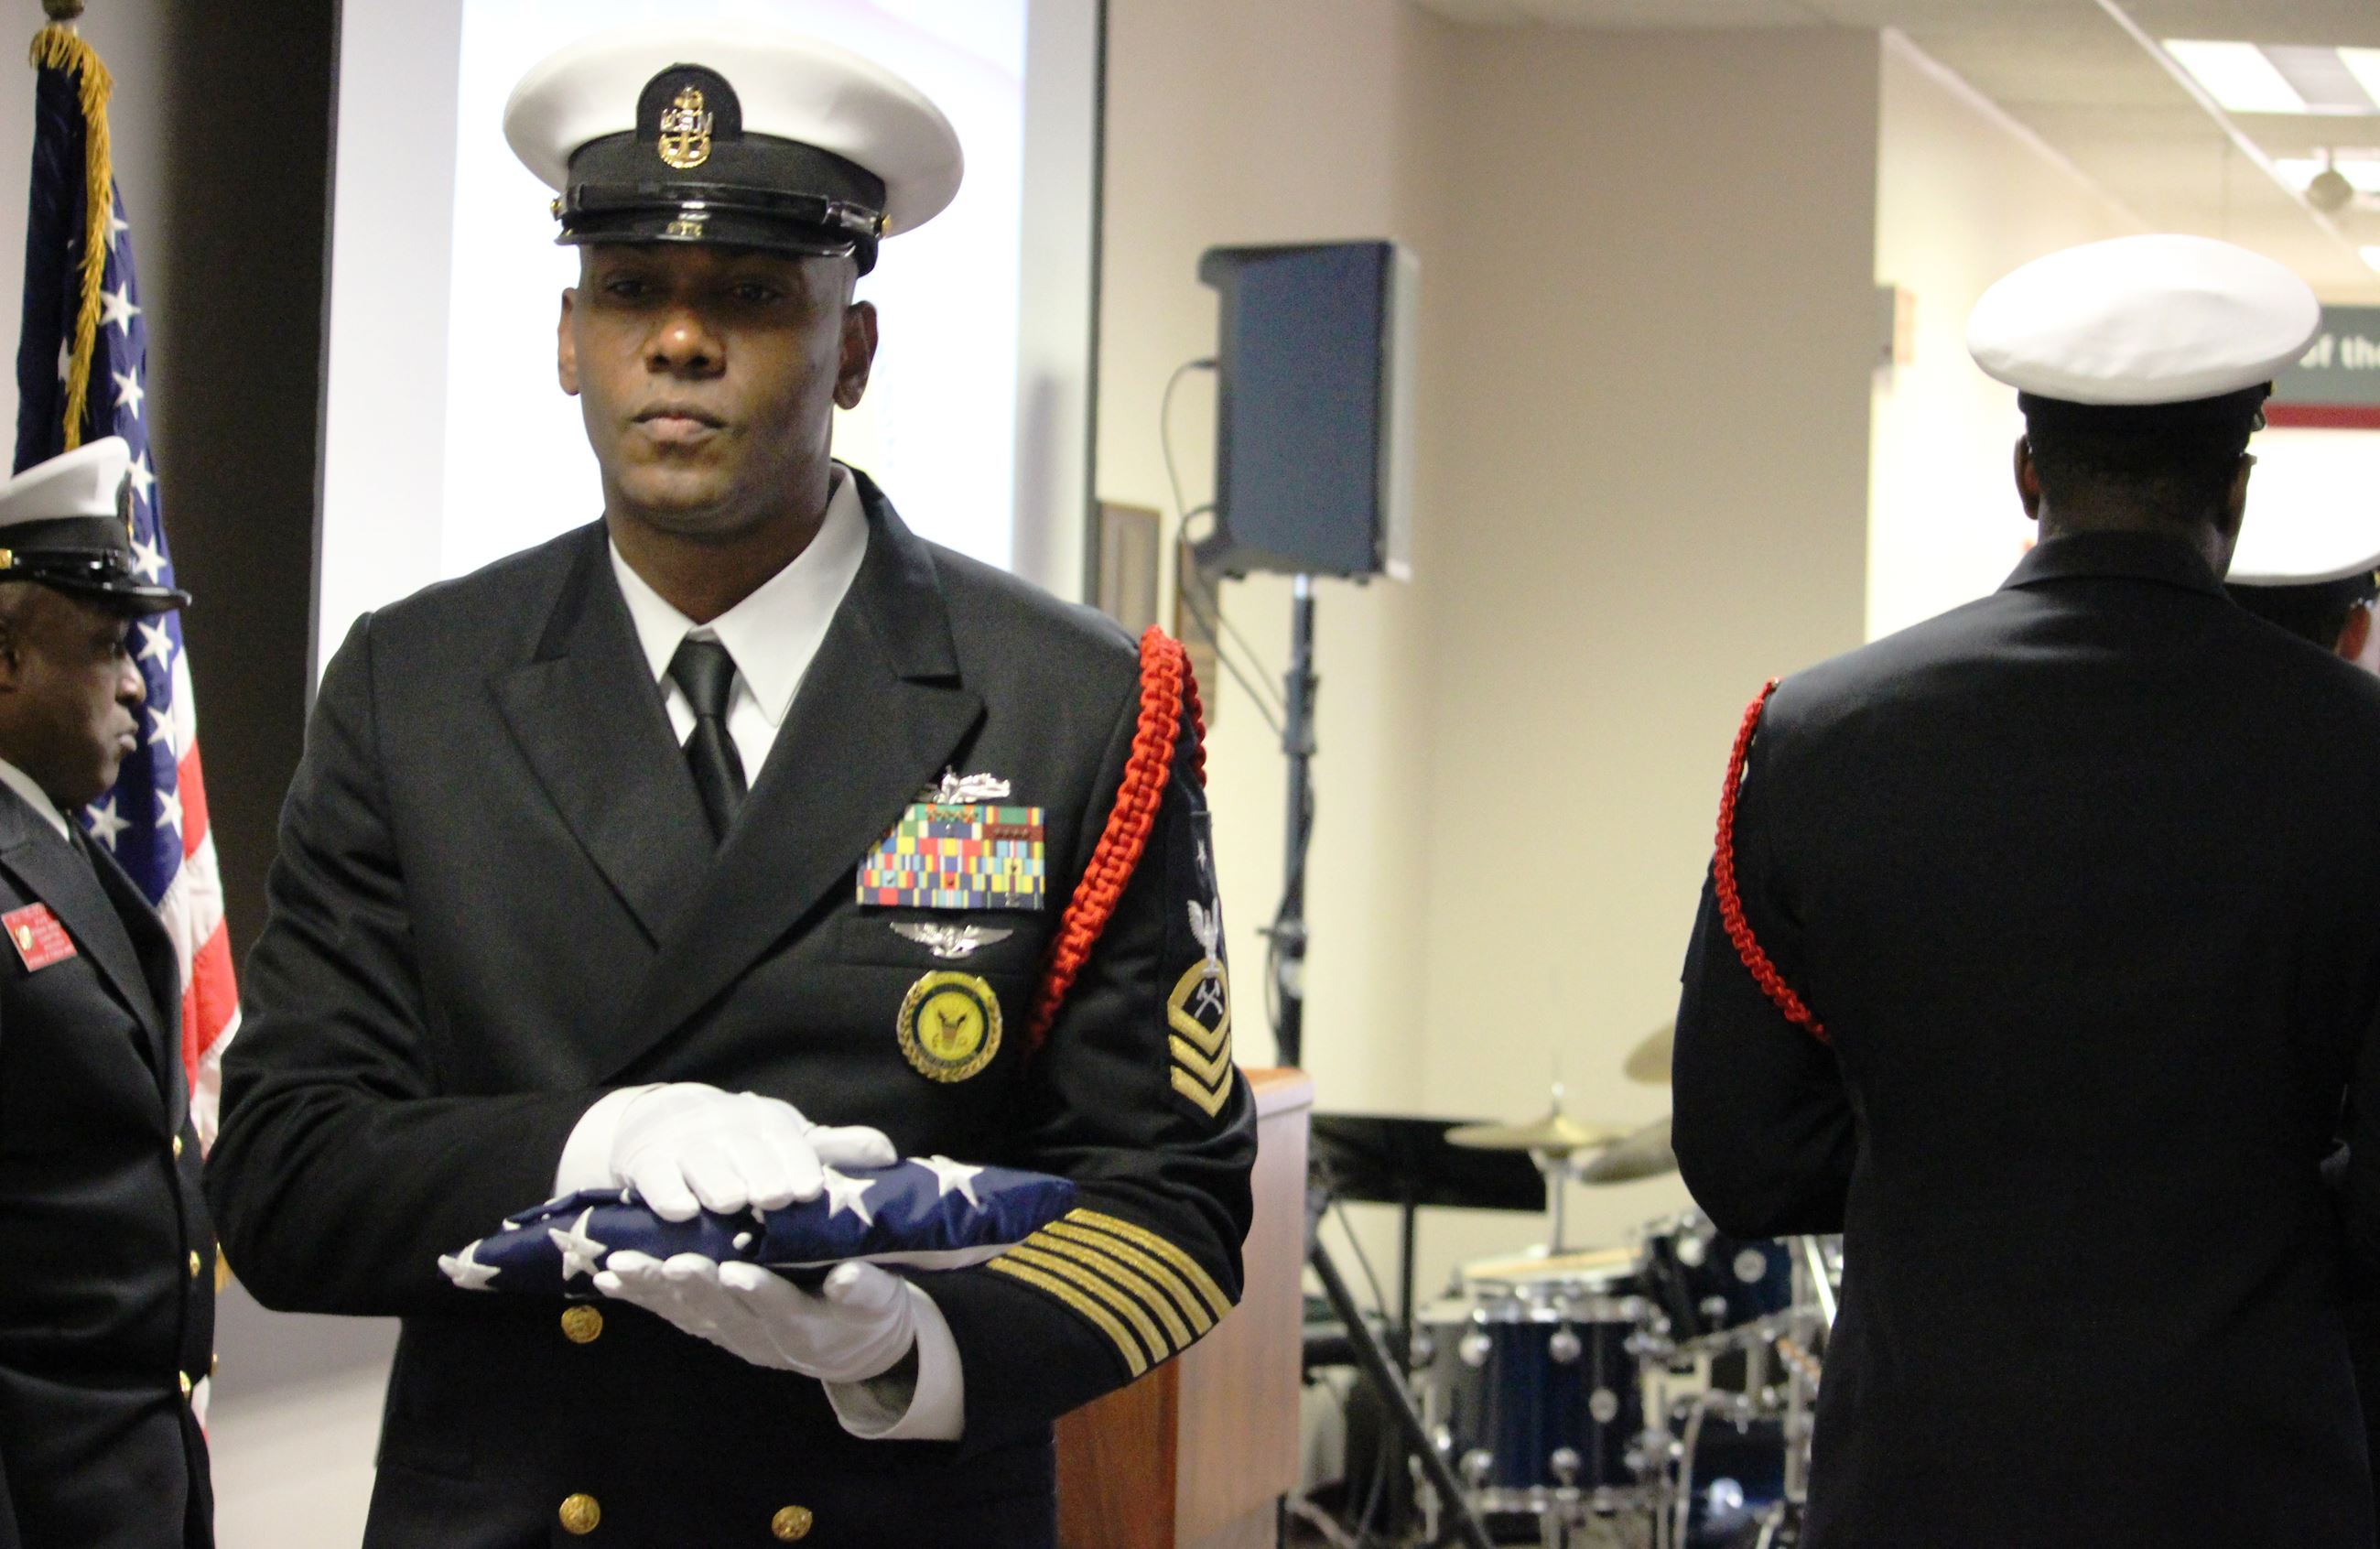 Flag ceremony at 2019 Veterans Celebration